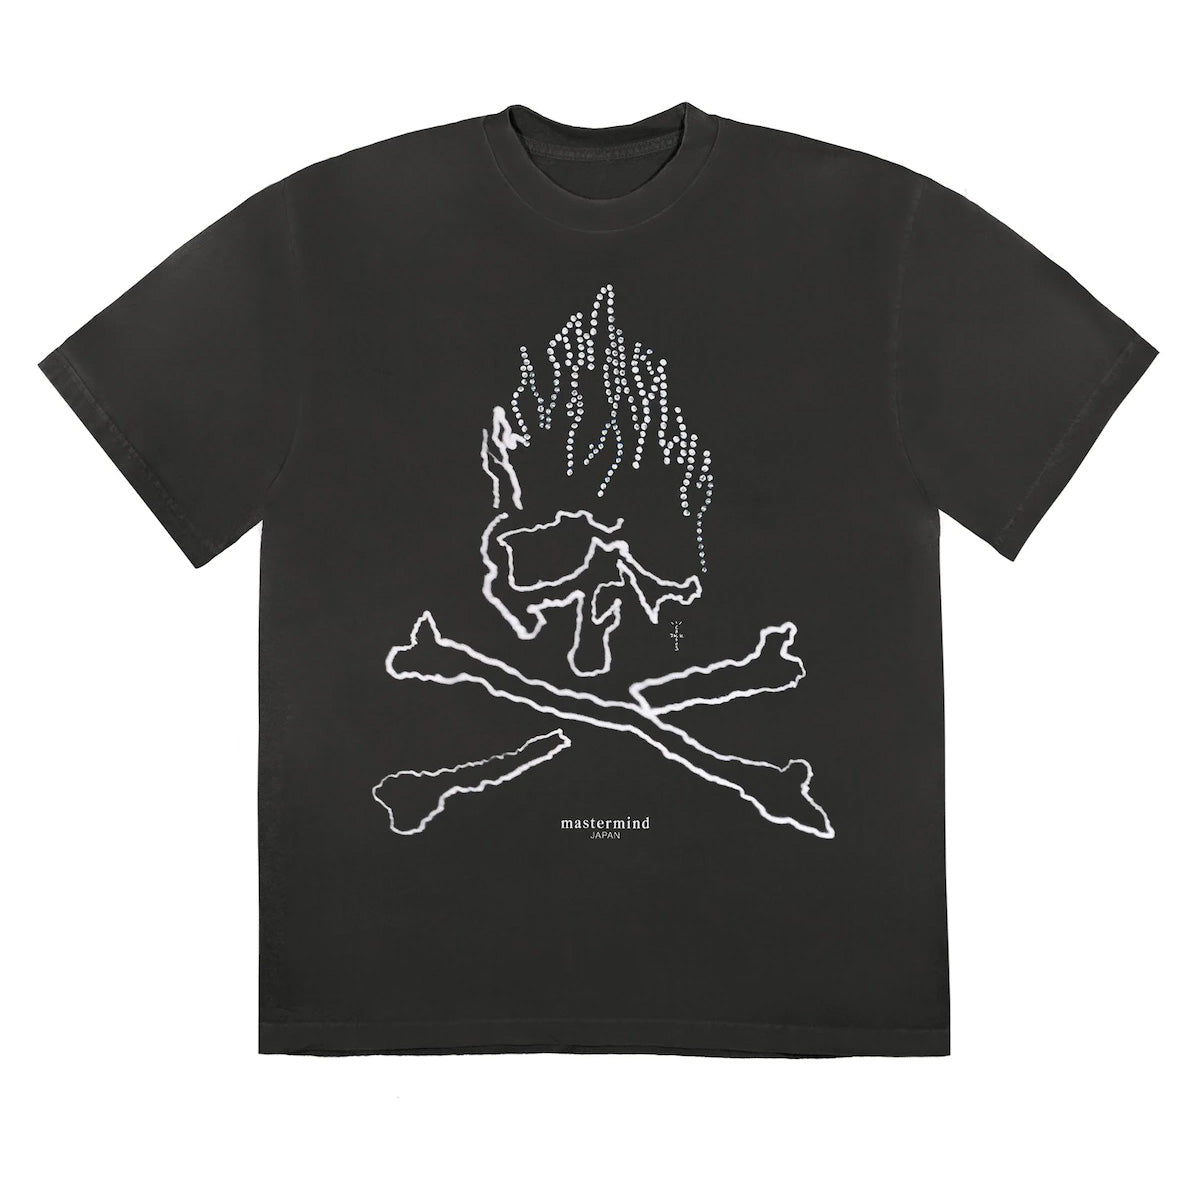 Travis Scott Cactus Jack Mastermind Skull T-shirt Black